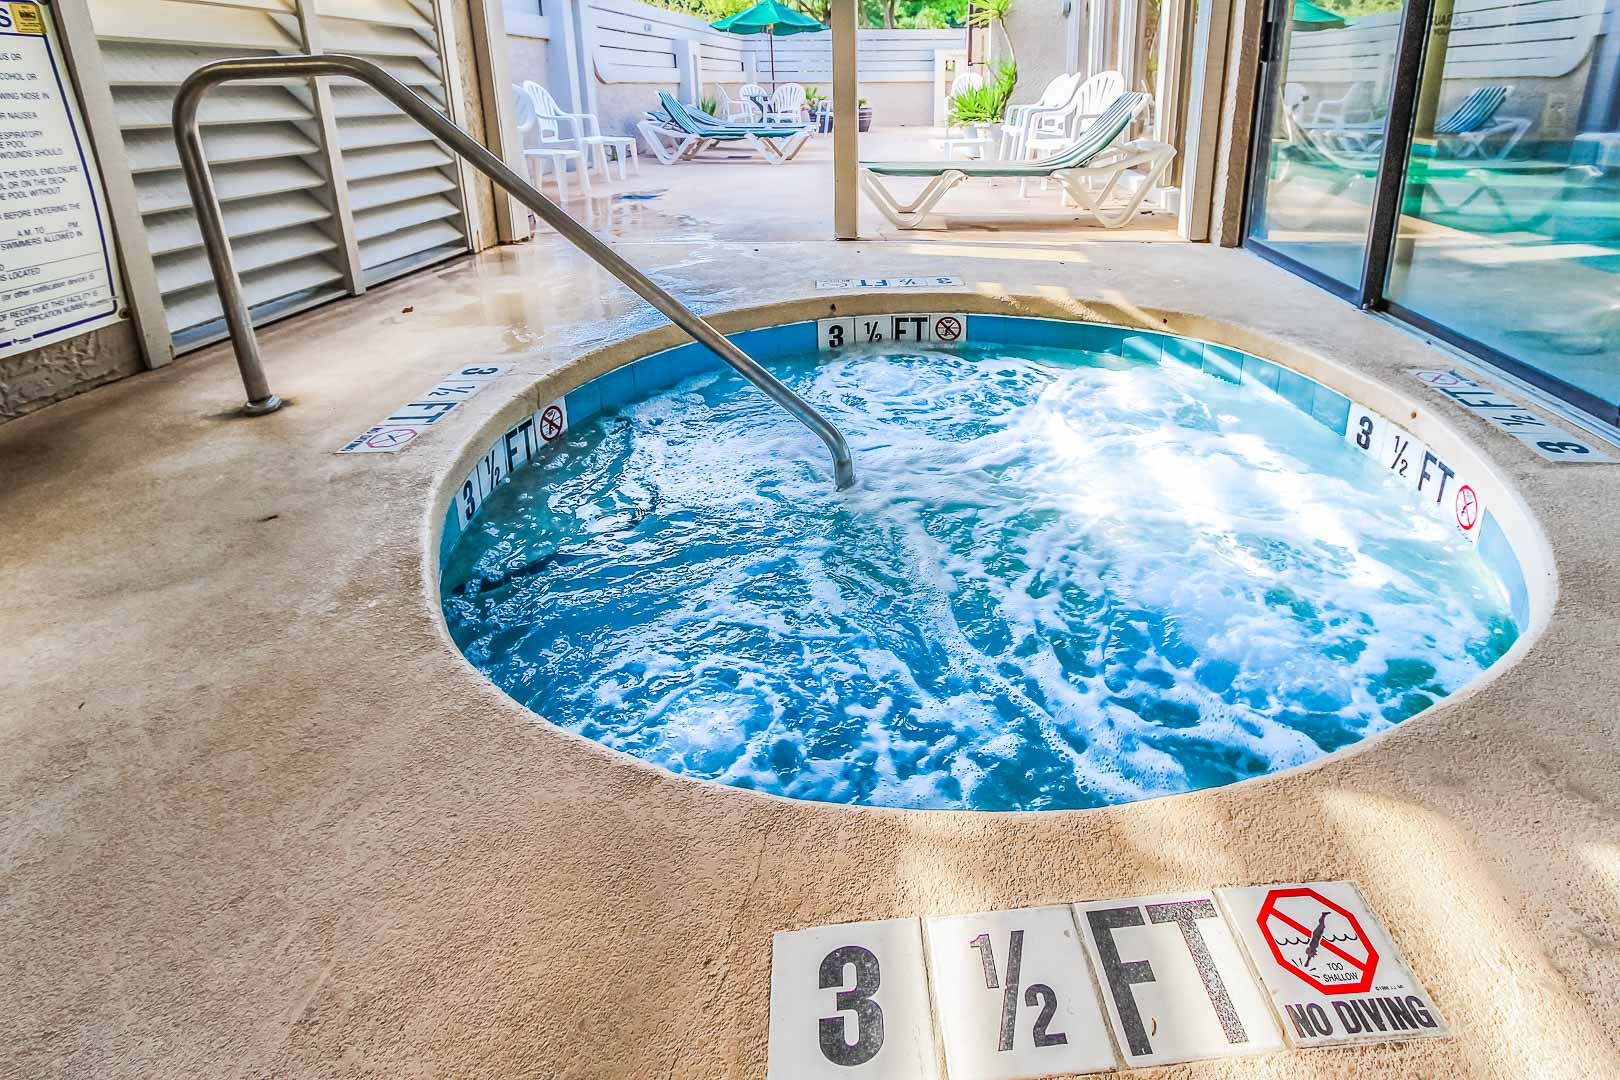 A relaxing Jacuzzi tub at VRI's Players Club Resort in Hilton Head Island, South Carolina.